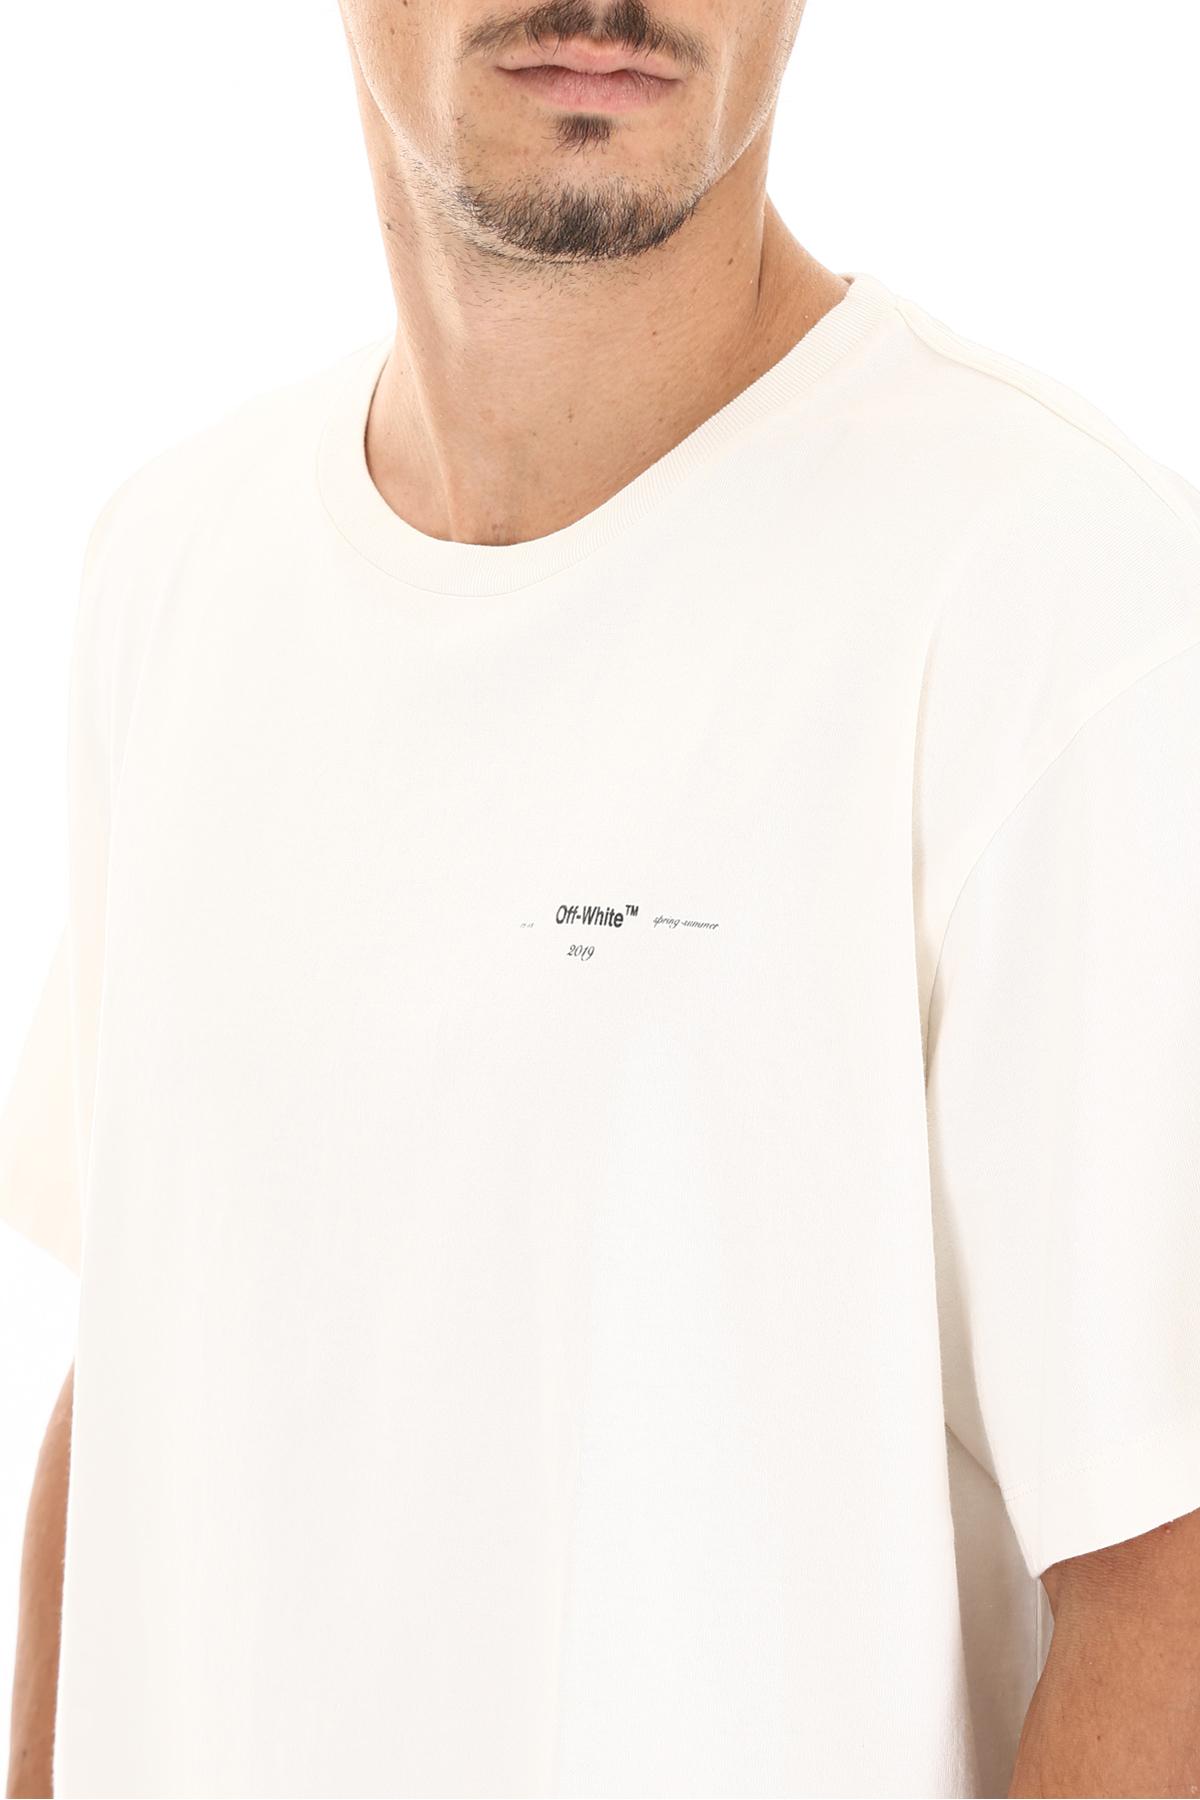 Off-White c/o Virgil Abloh Multicolor Arrows T-shirt in White for 